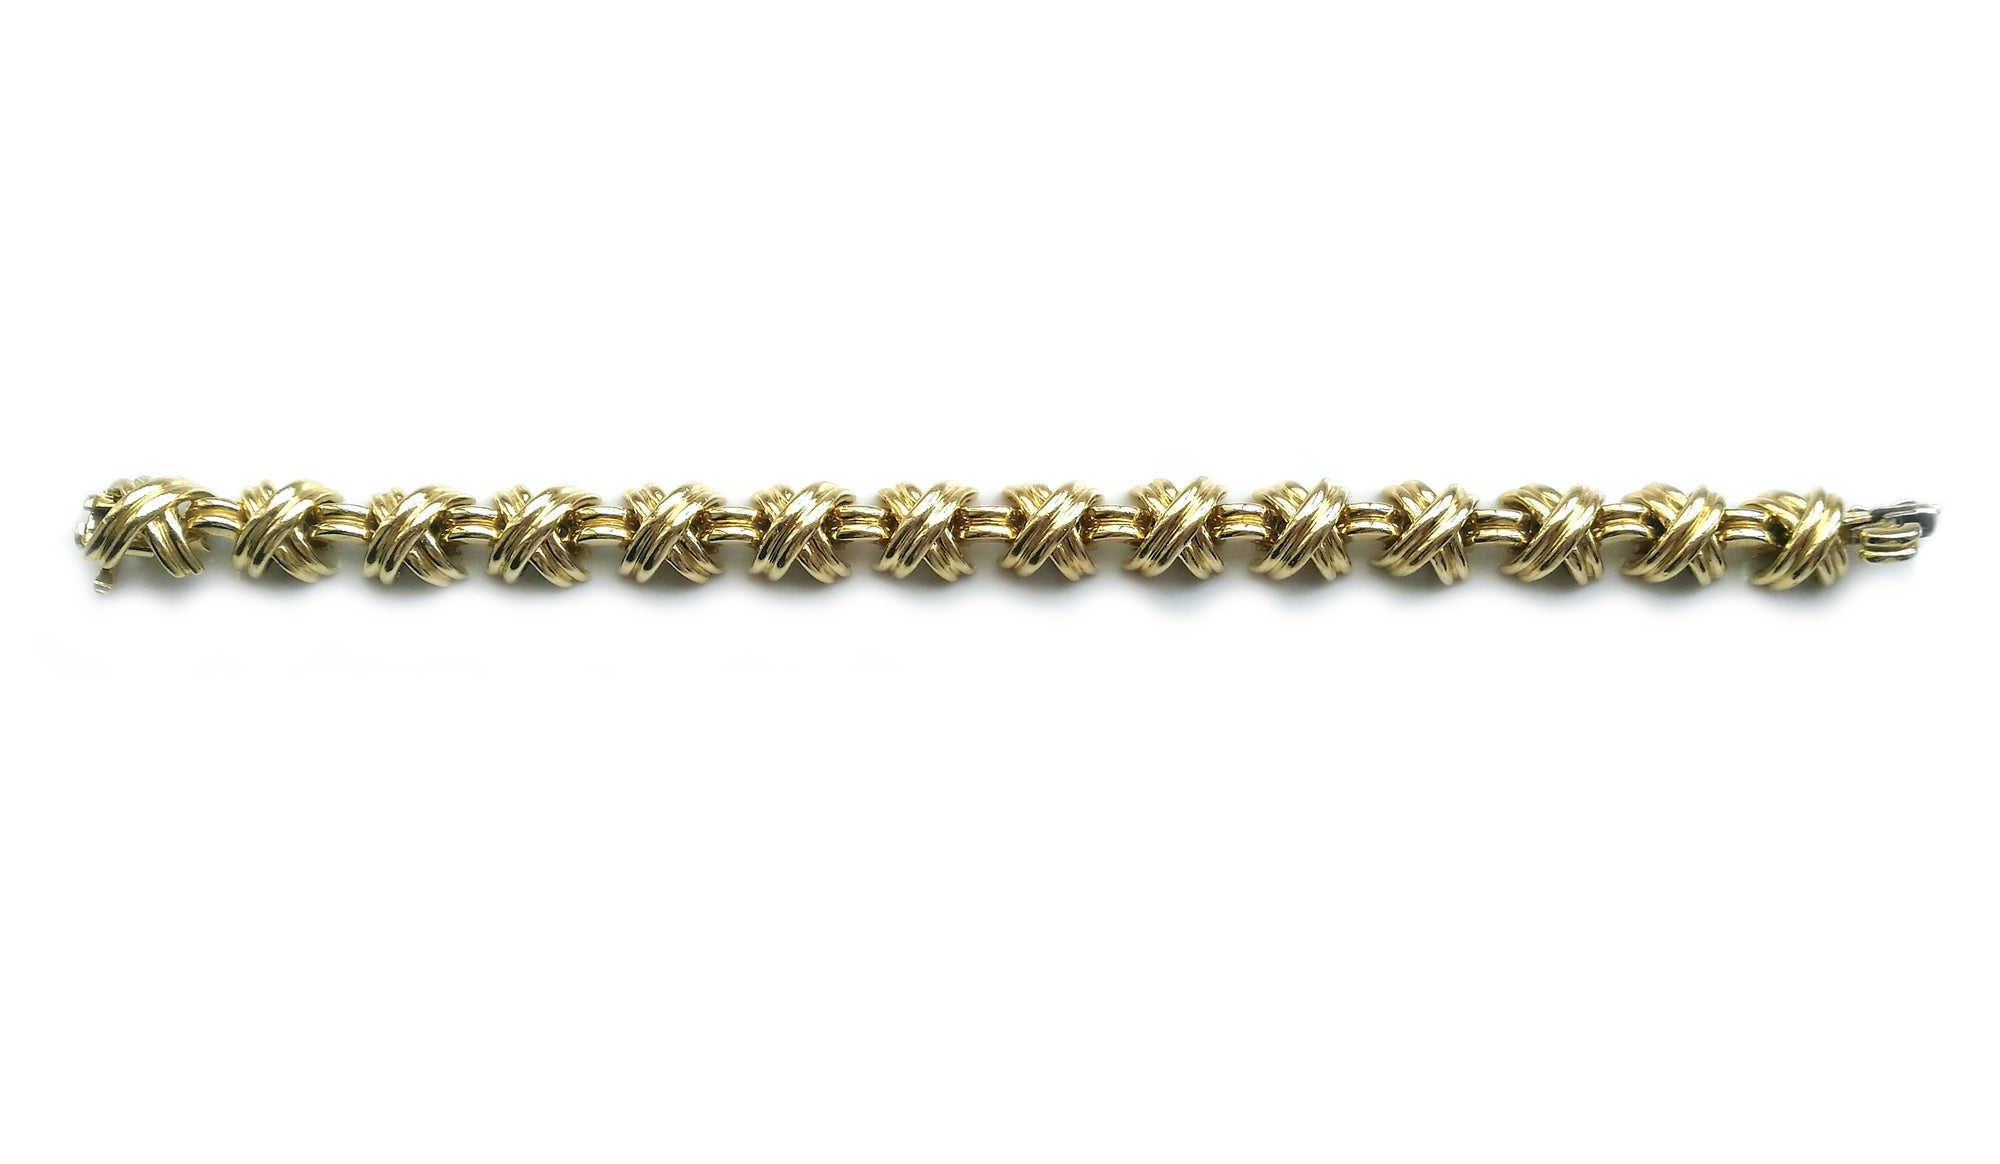 Tiffany & Co Vintage 1980s Signature X Bracelet 18k Yellow Gold 7 1/2 inch 49.3g